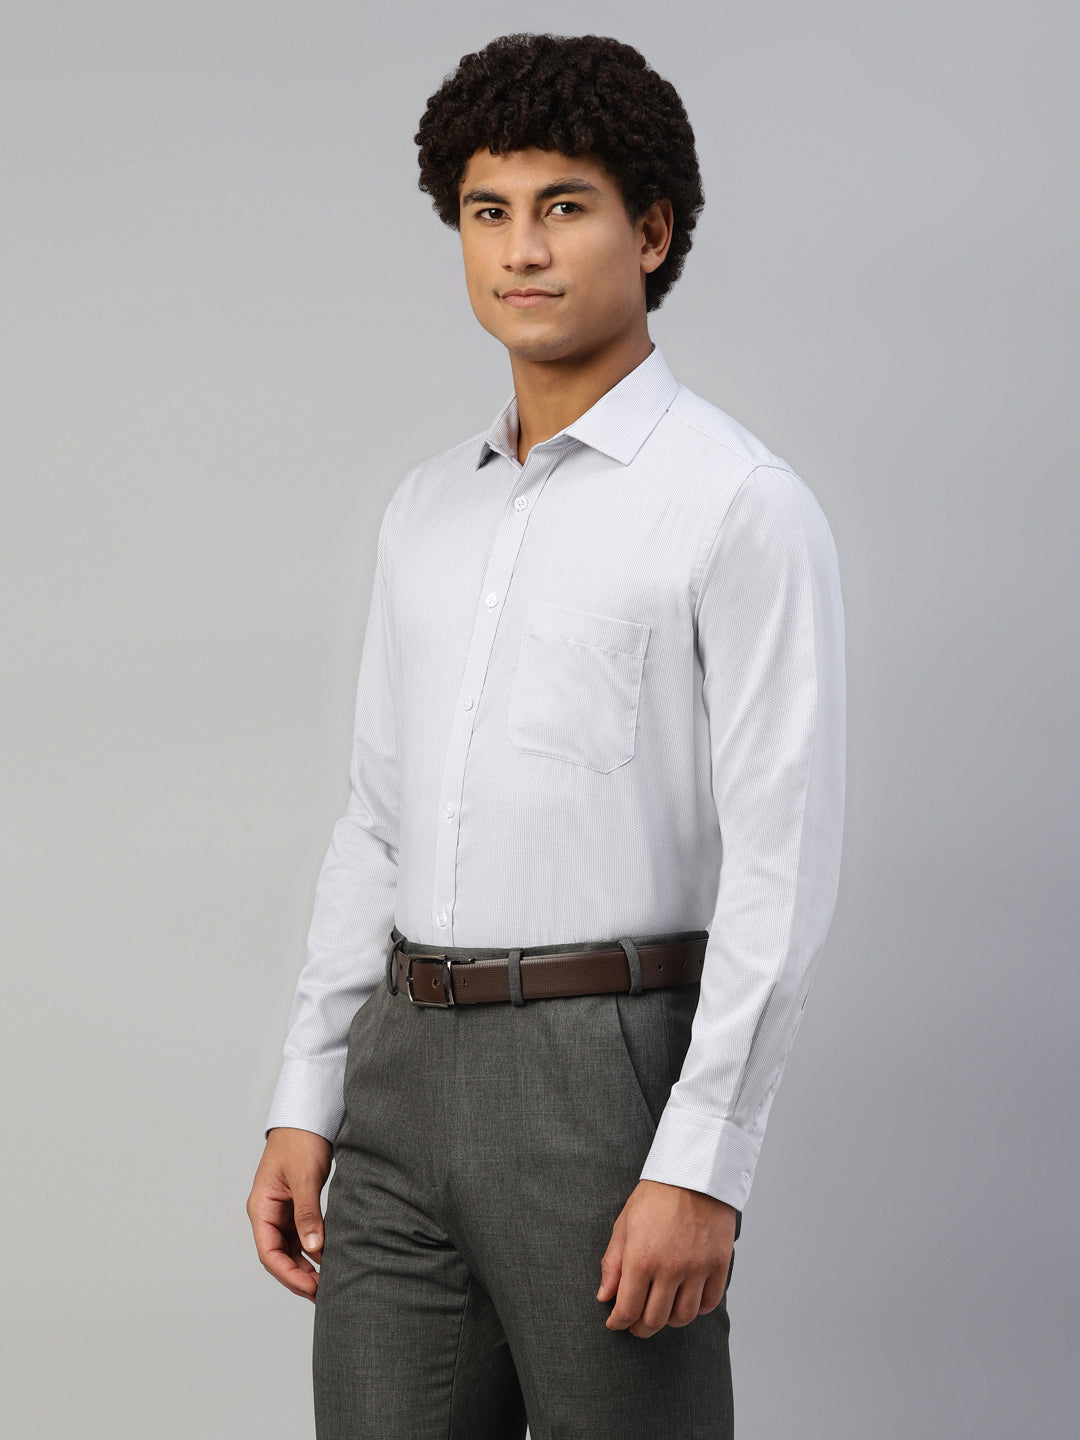 Don Vino Men's Solid Grey Full Sleeve Regular Fit Shirt